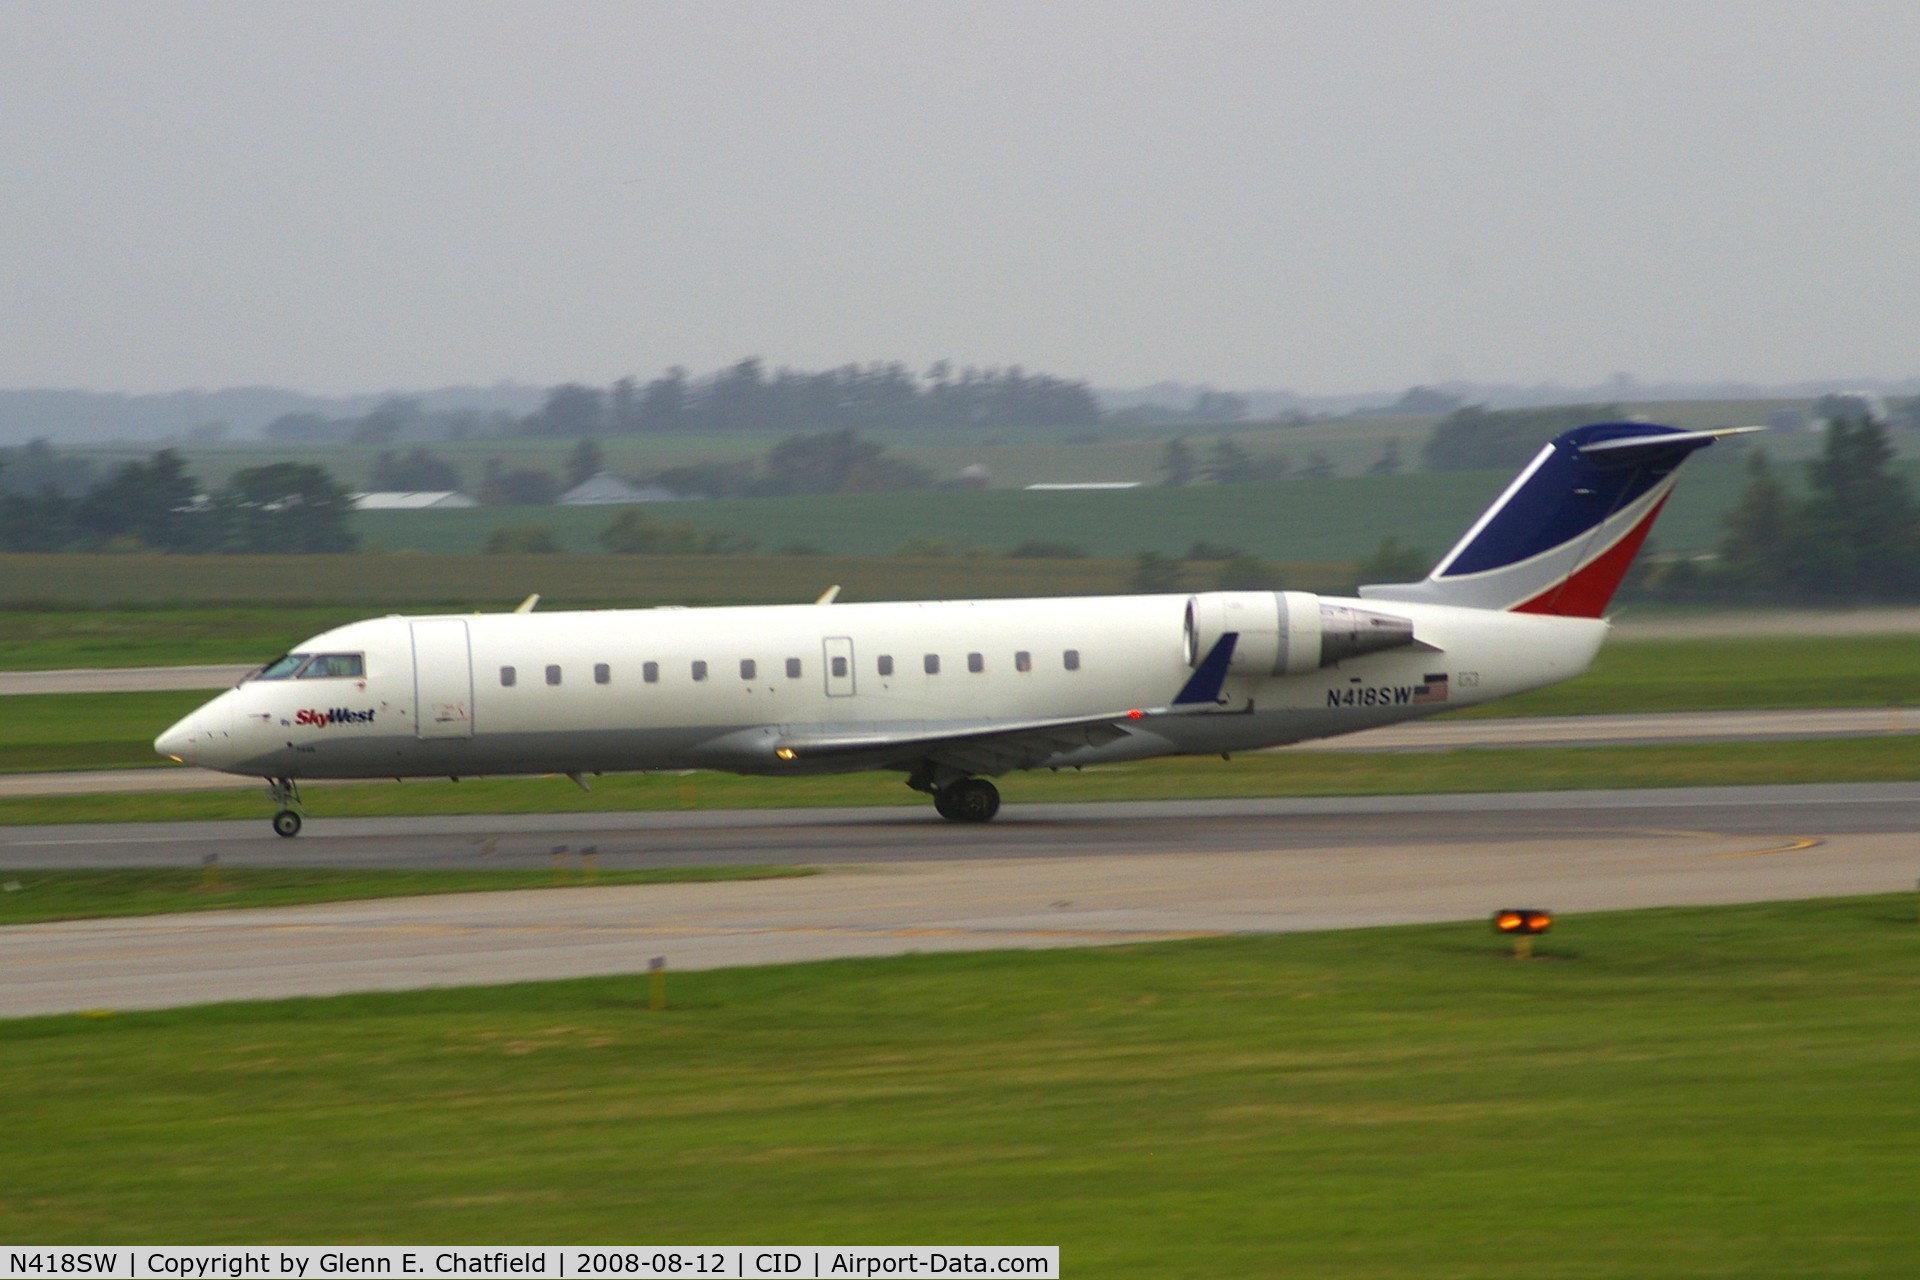 N418SW, 2000 Bombardier CRJ-200LR (CL-600-2B19) C/N 7446, Take-off roll on Runway 13 during light rain